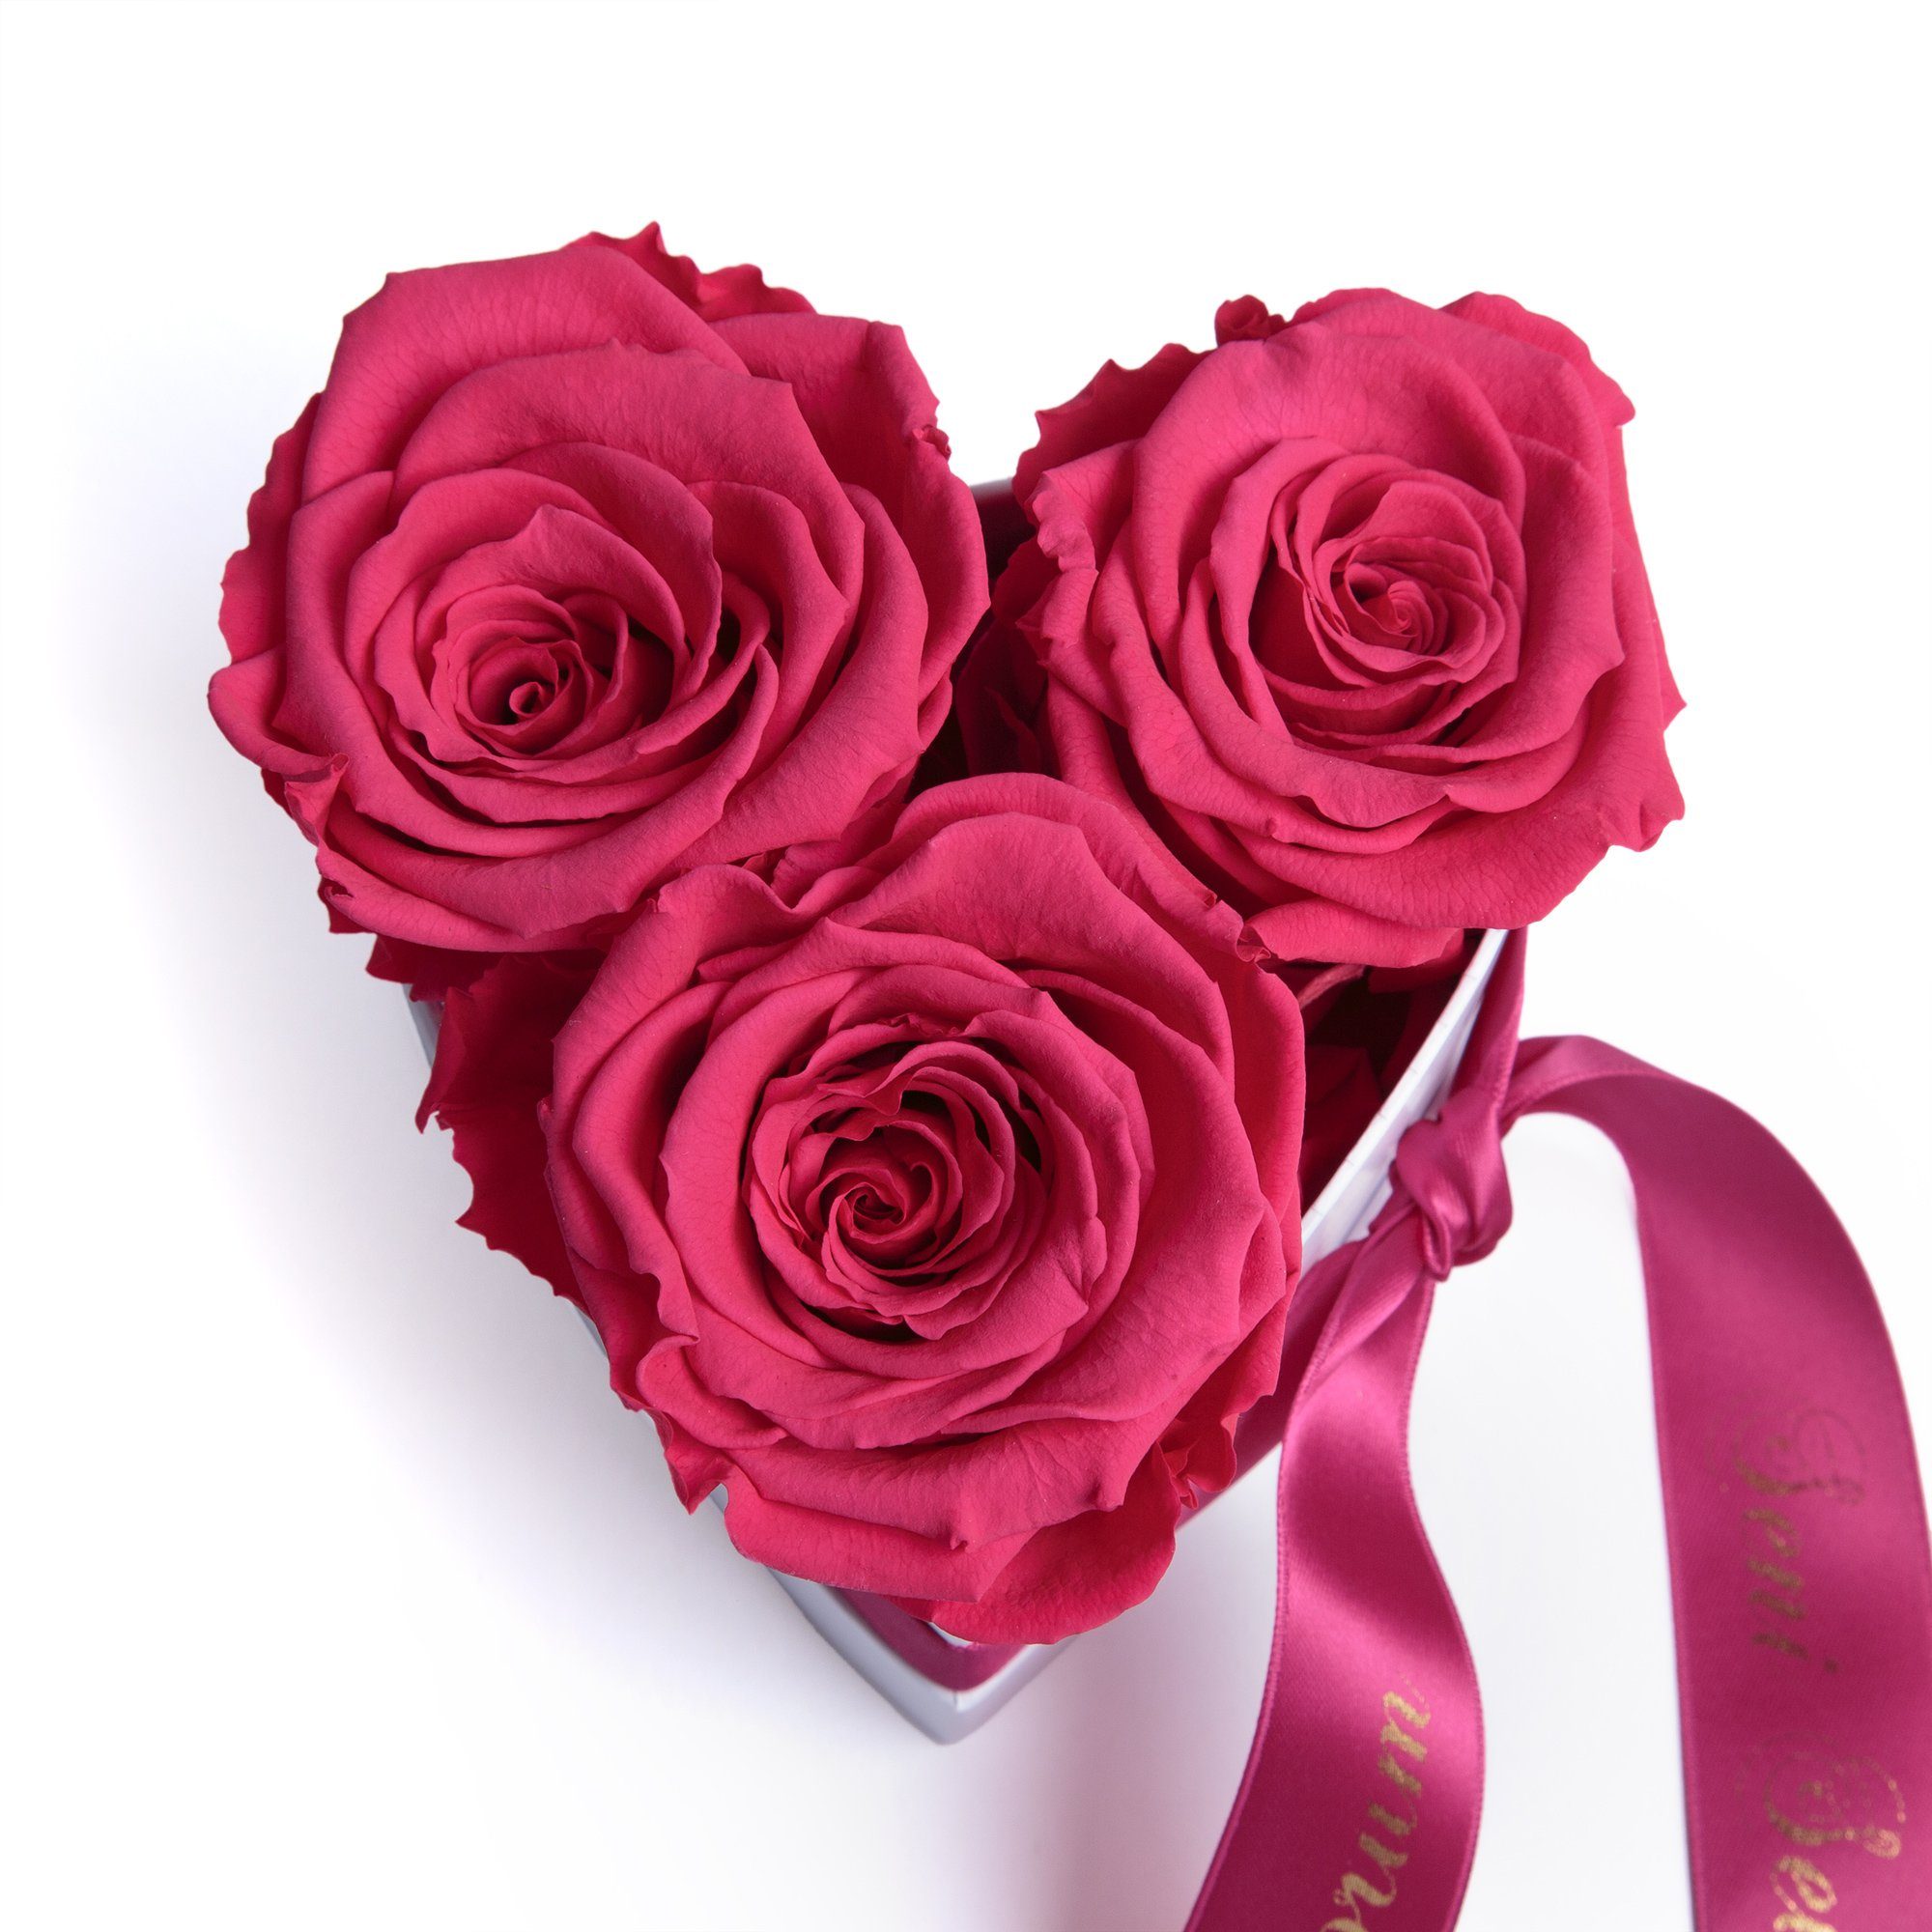 SCHULZ cm, konserviert Pink Infinity Seviyorum Rosen ROSEMARIE Rose, 10 Herz lang haltbar echte Rosenbox Seni Kunstblume Heidelberg, 3 echte Höhe Rosen